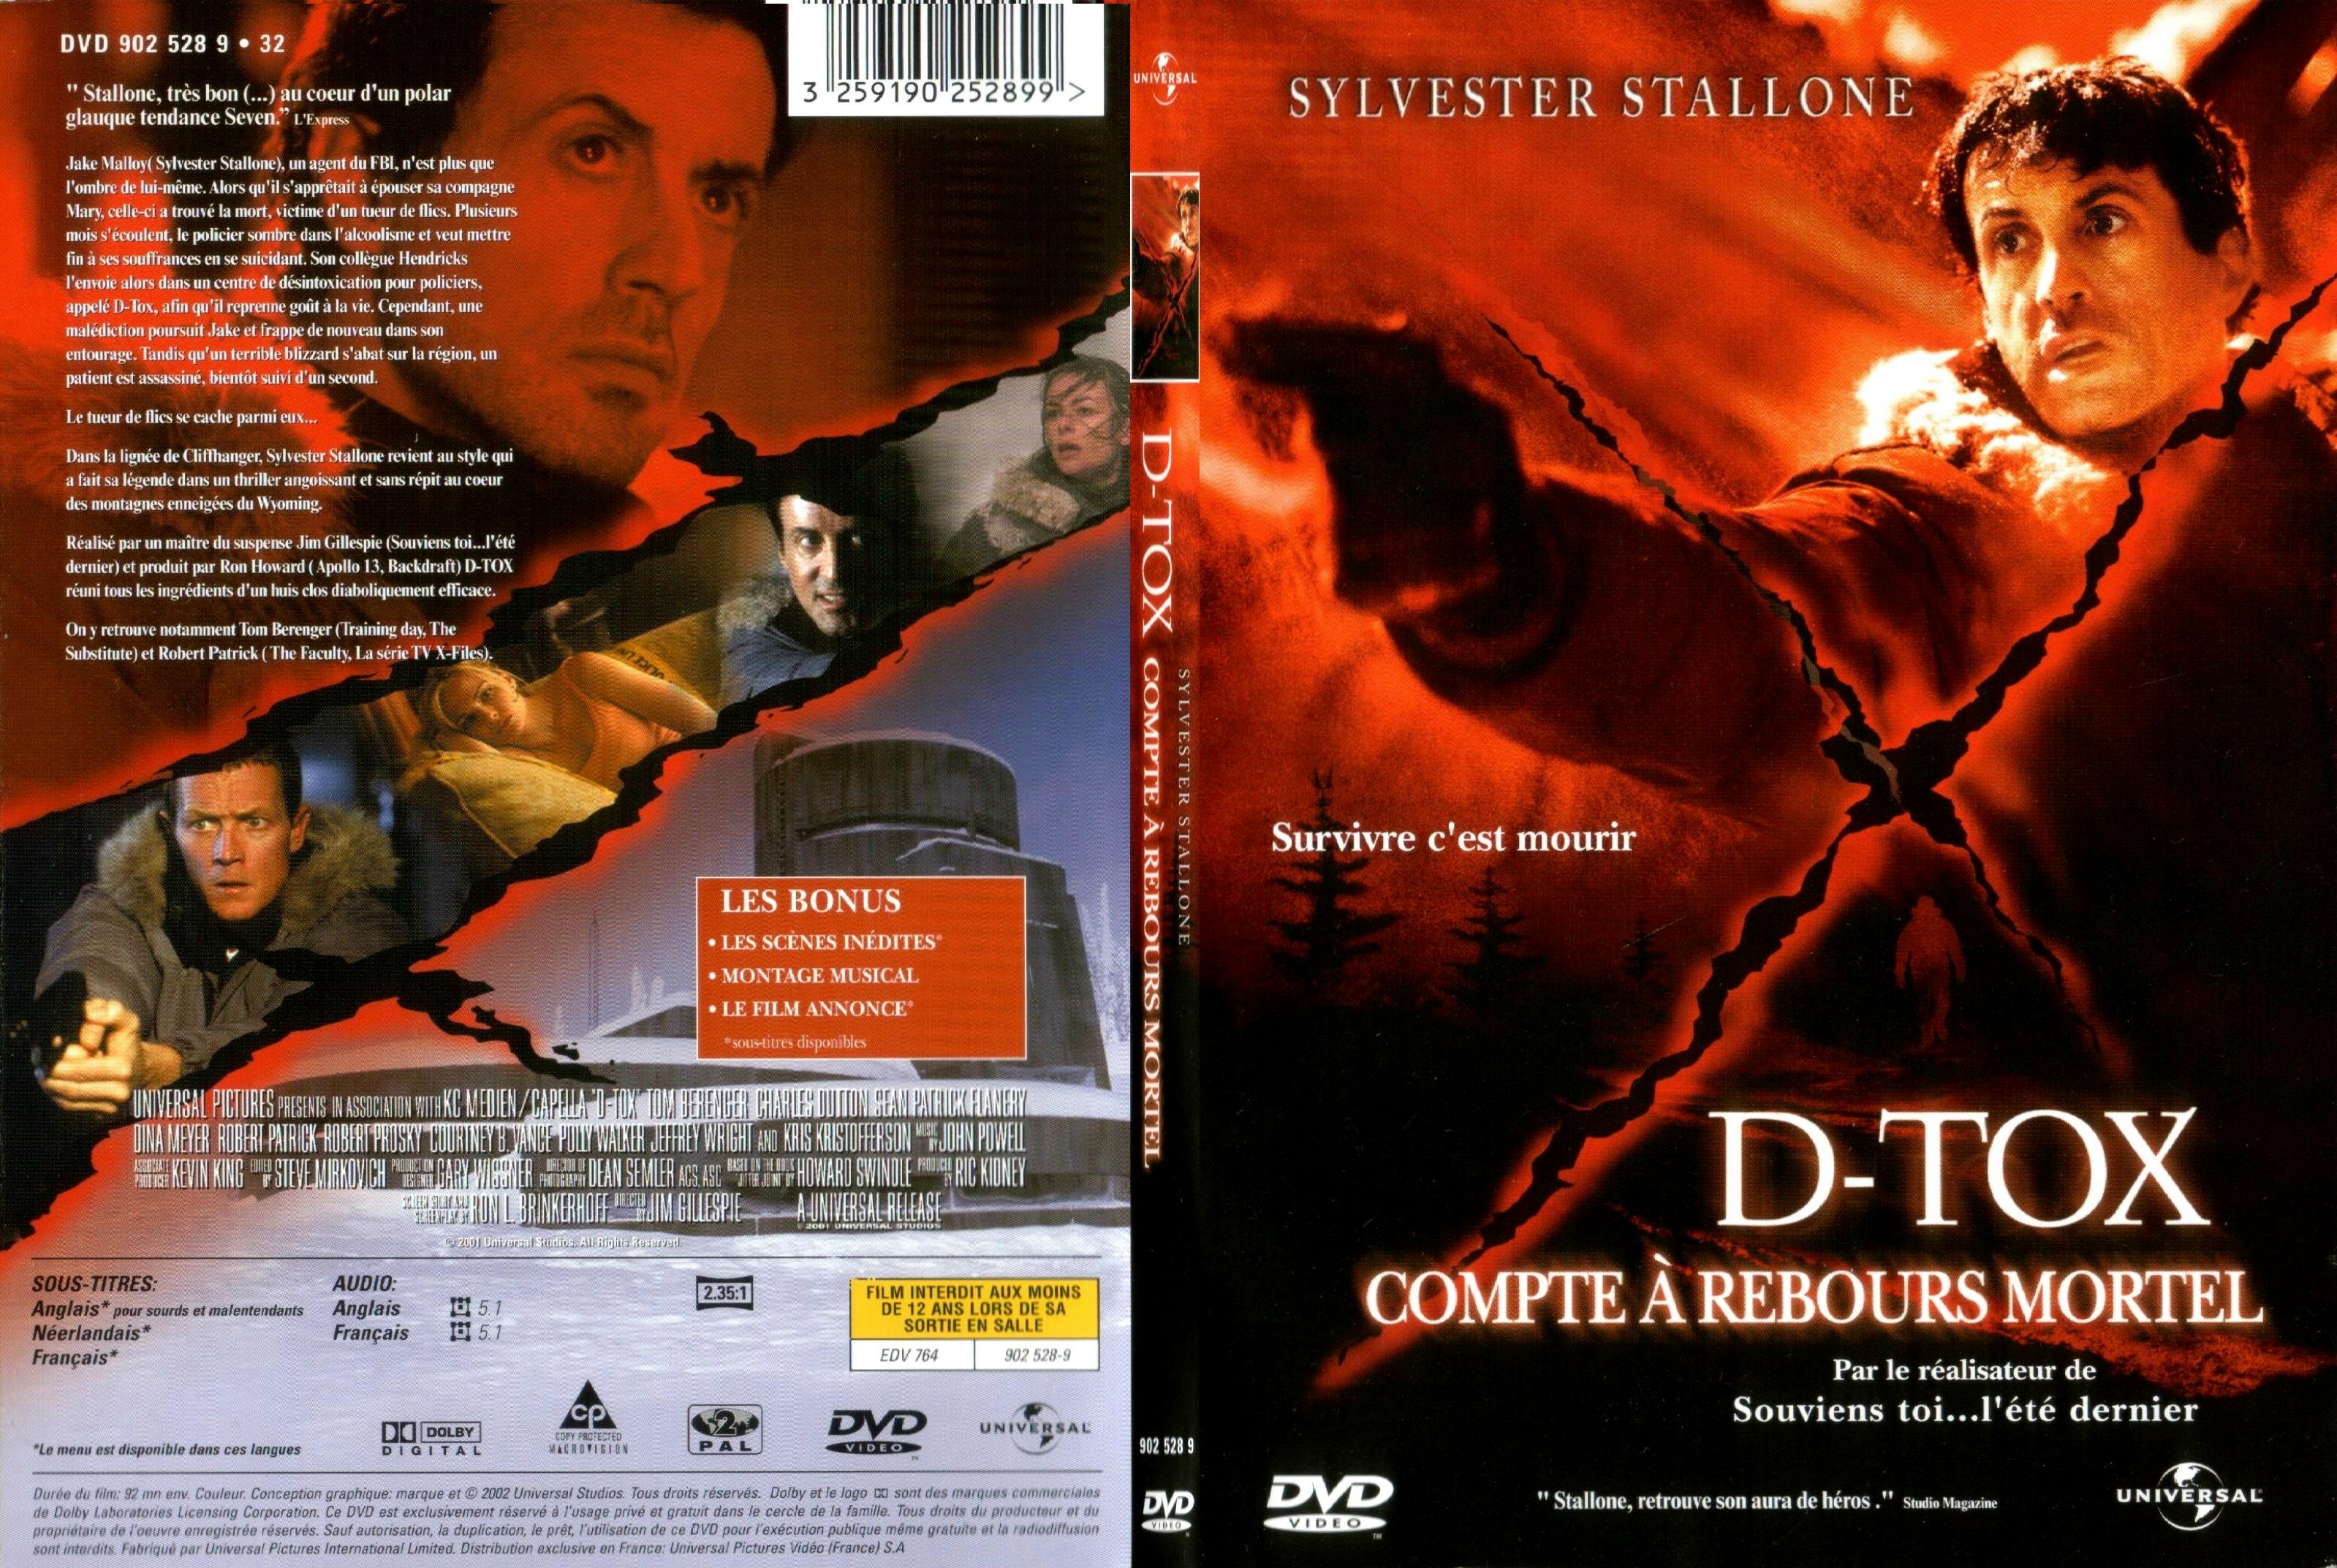 Jaquette DVD D-tox - SLIM